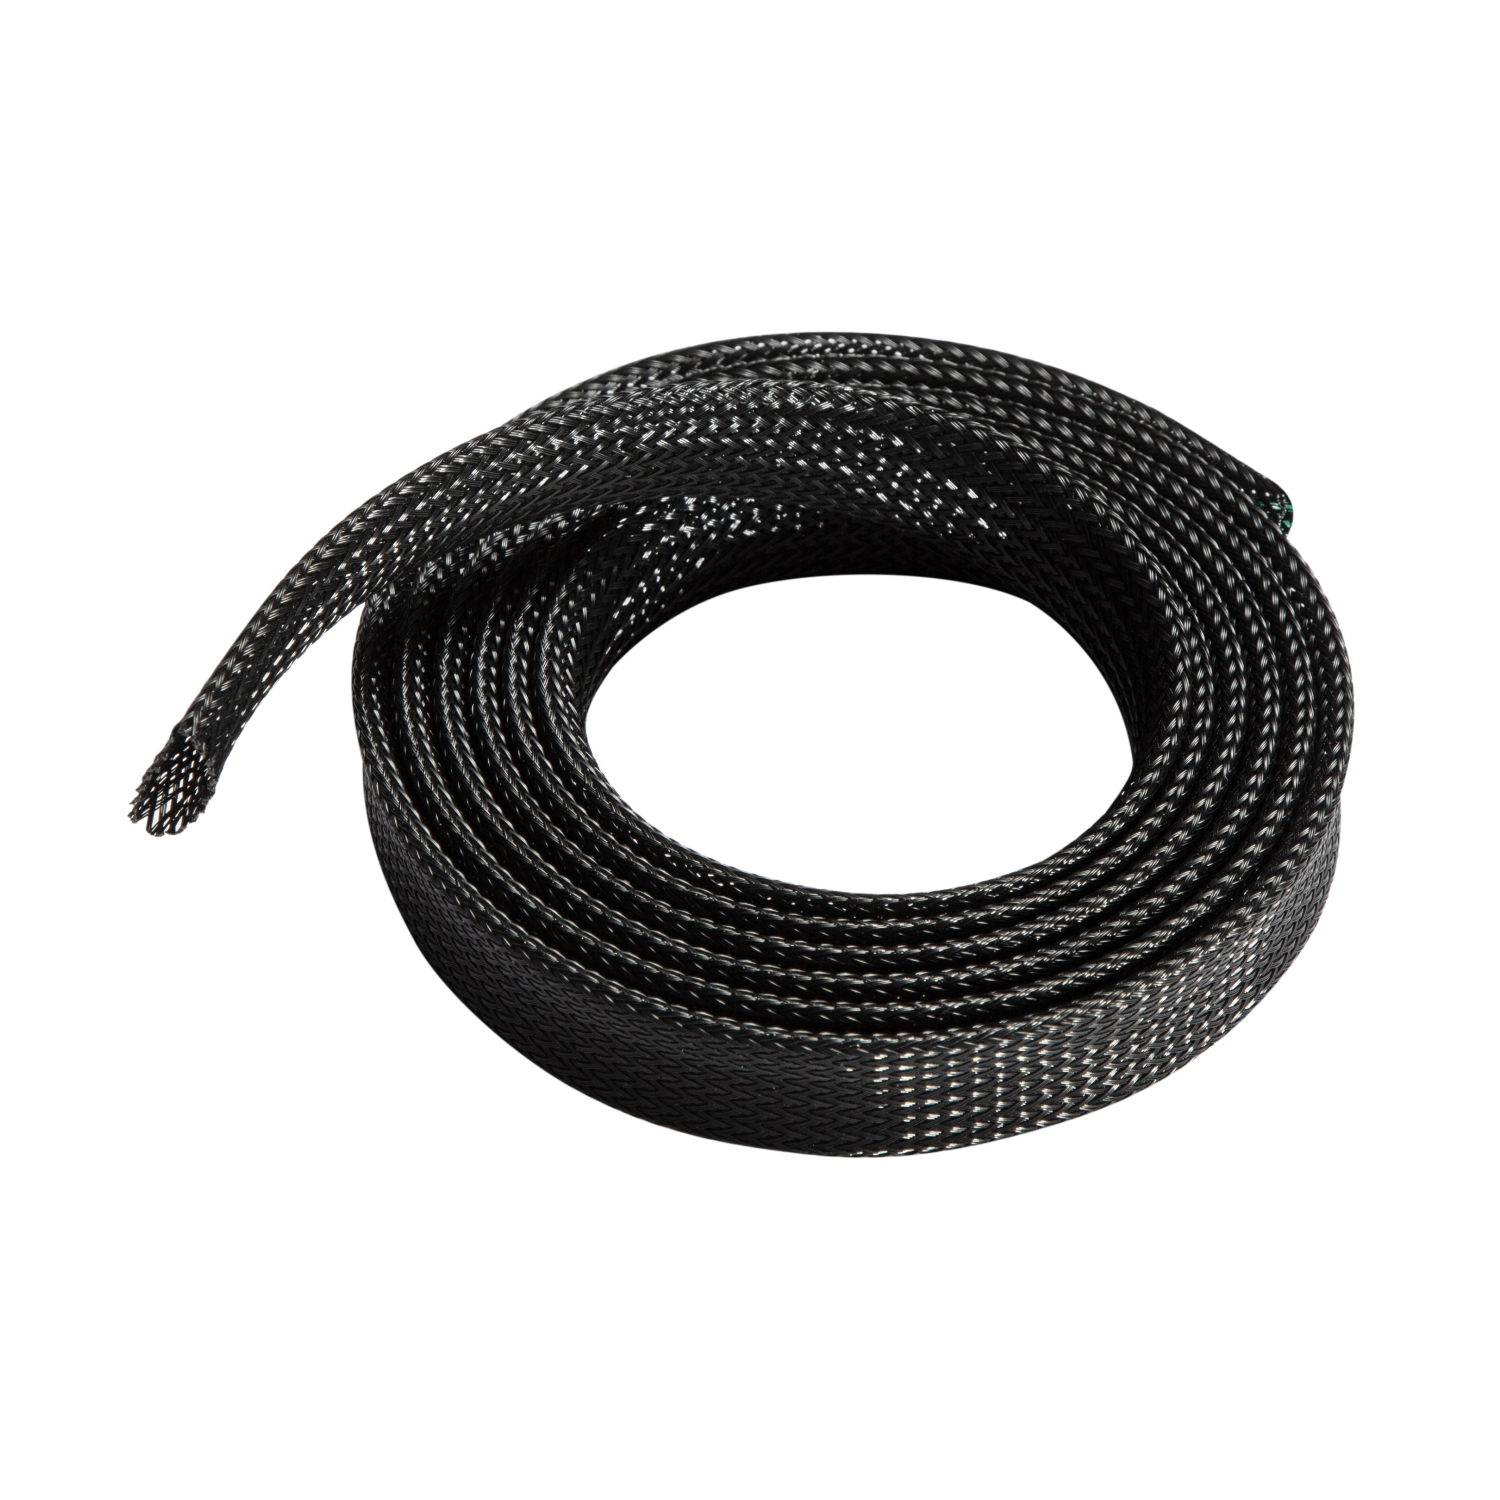 Aisens Organizador De Cable Poliester 20mm - 1.0m - Color Negro